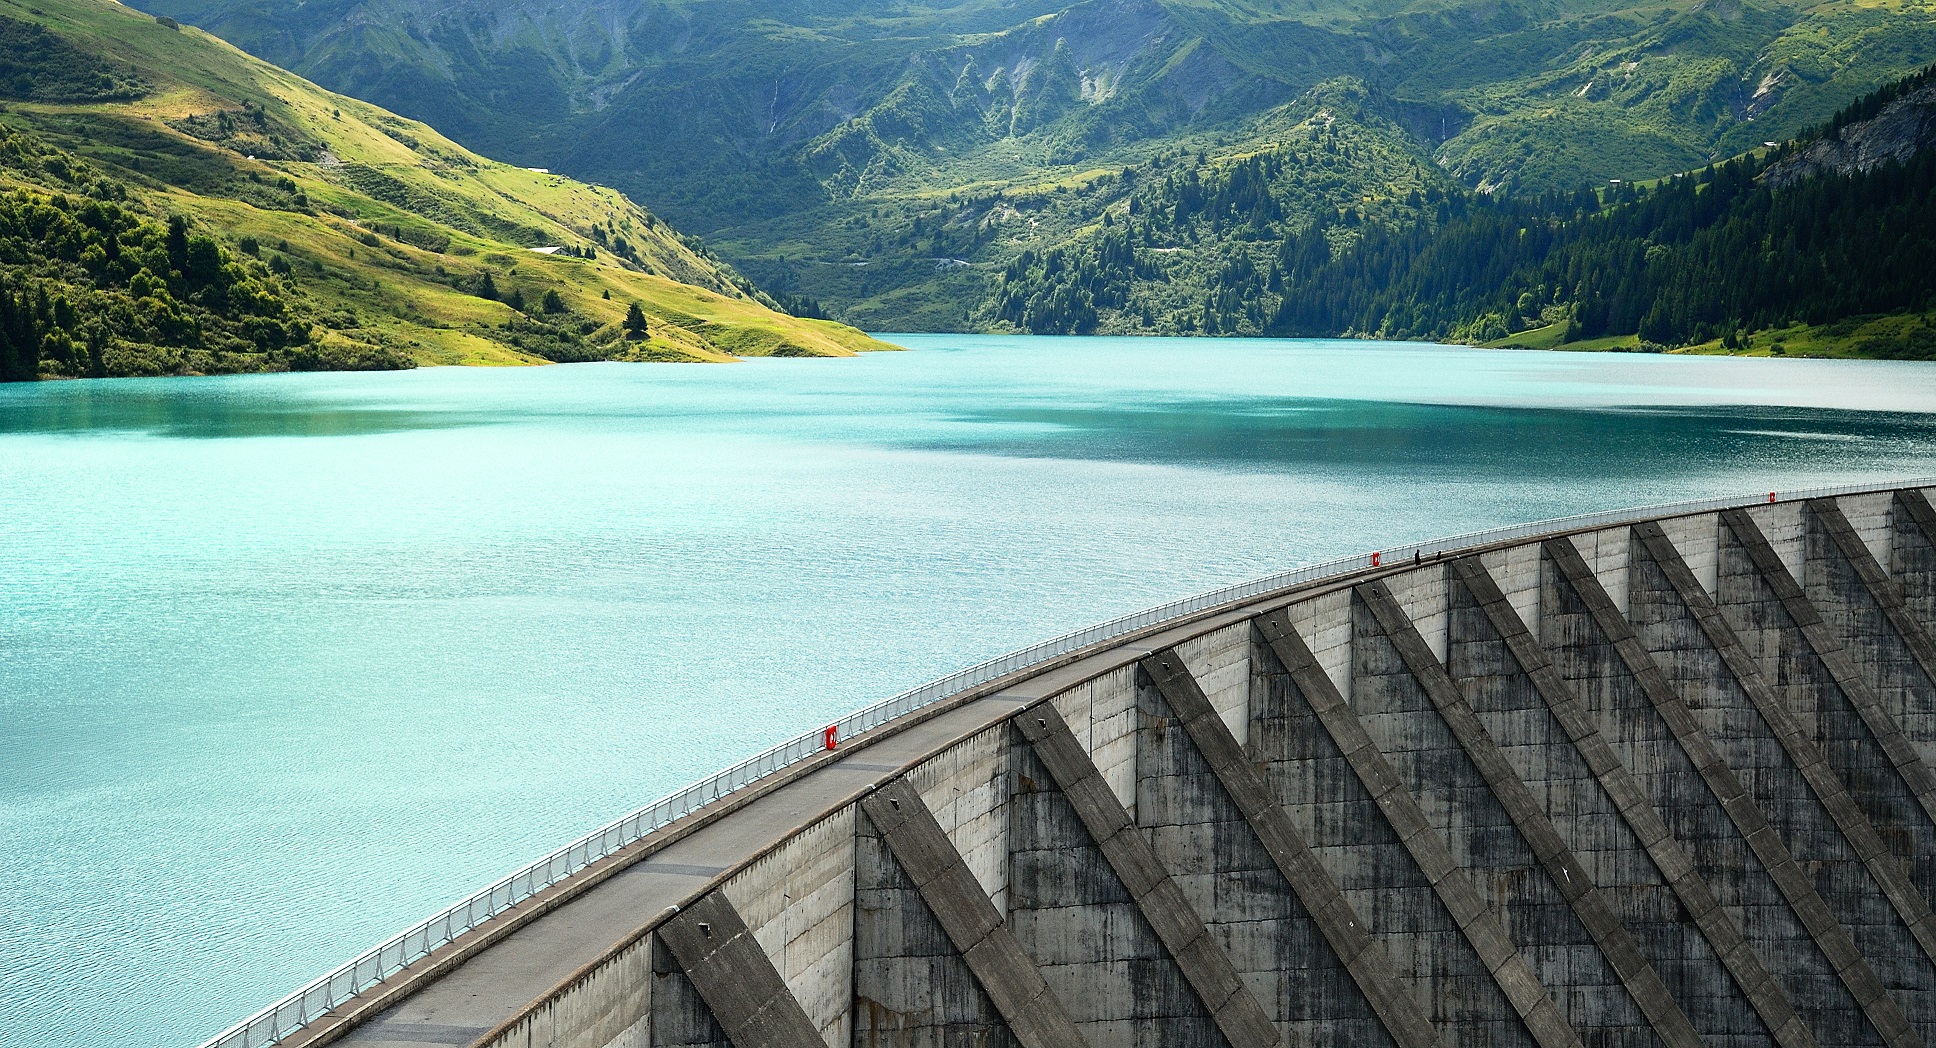 Hydrogrid unlocks the power of hydro energy